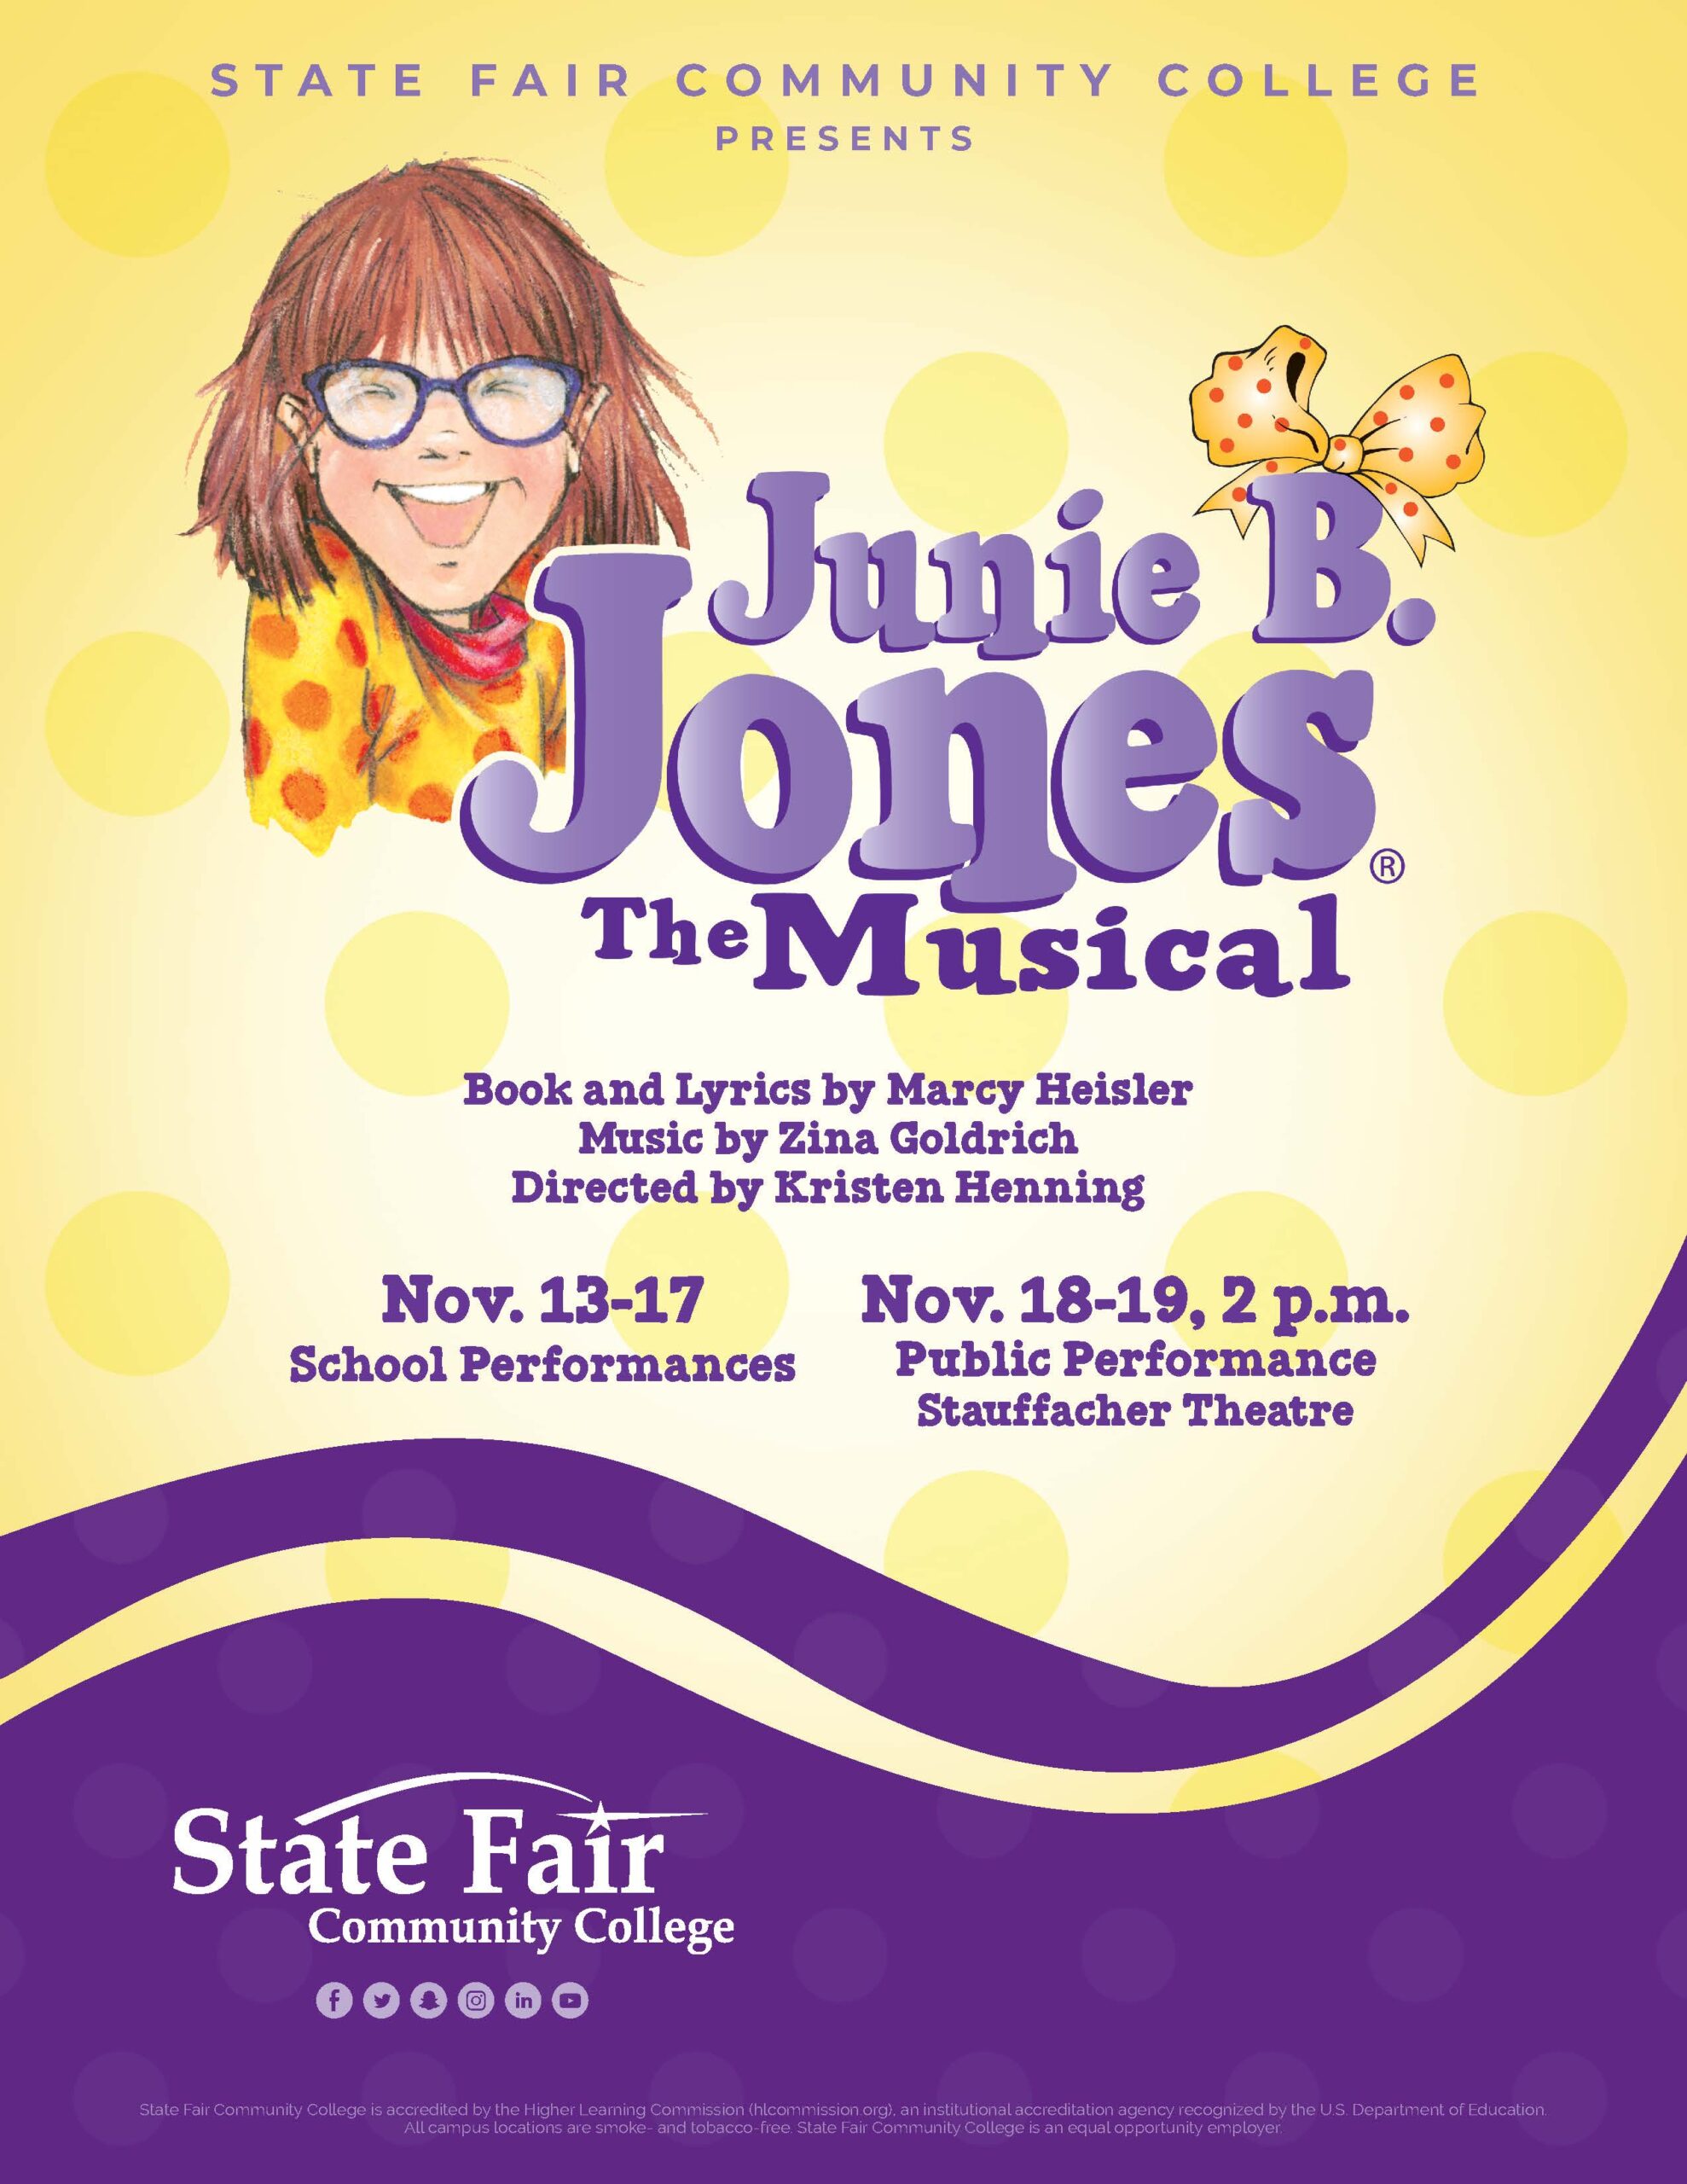 Read more about SFCC Theatre Arts to present ‘Junie B. Jones: The Musical’ public performance